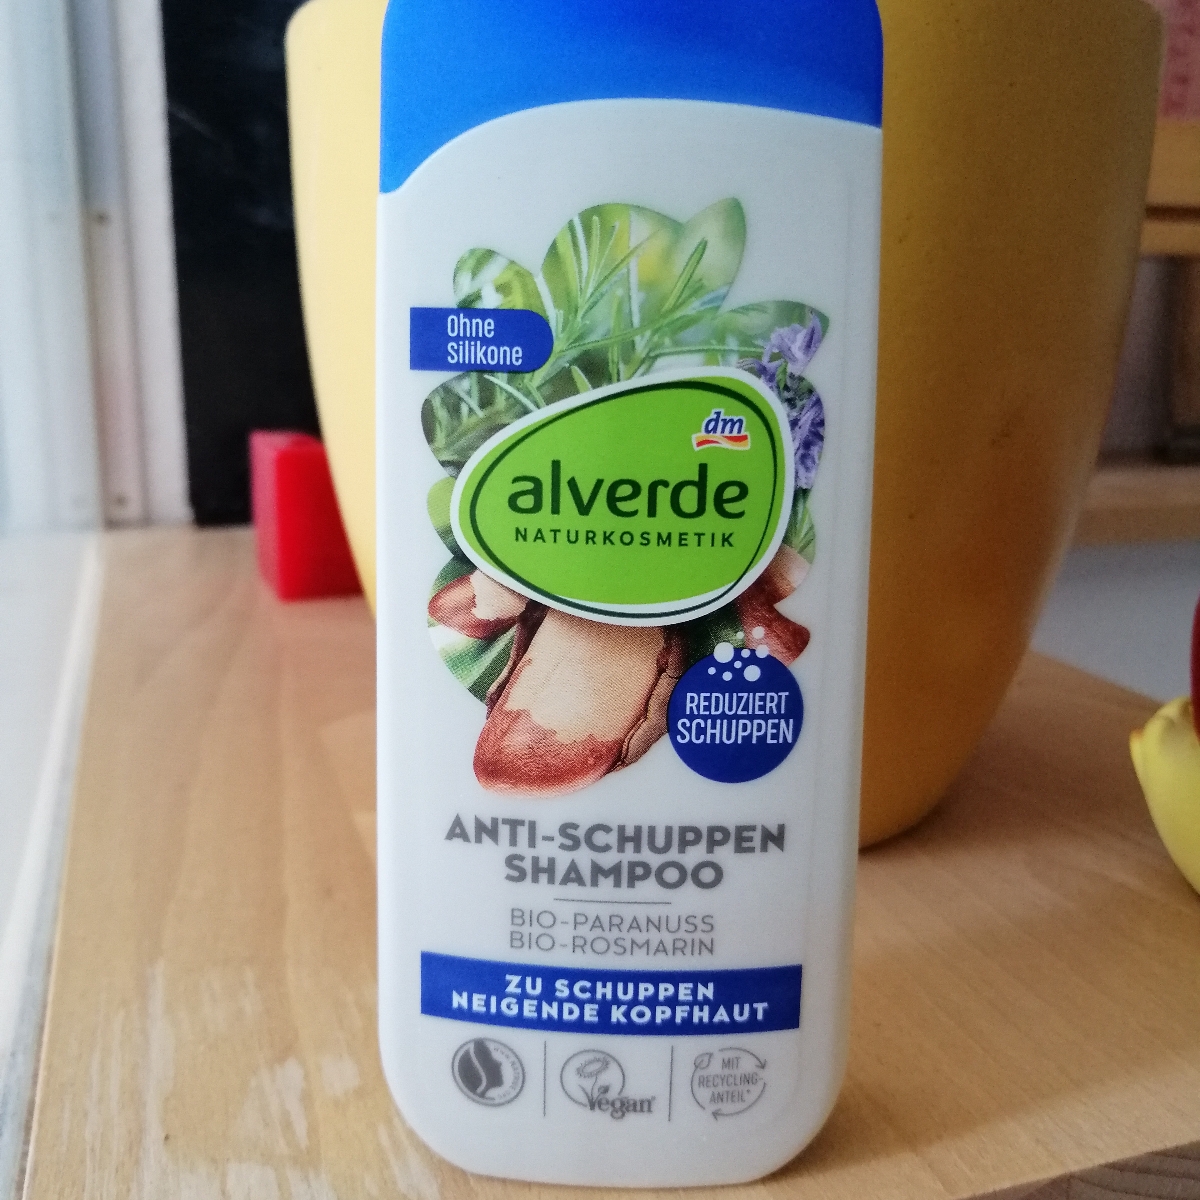 Alverde Naturkosmetik Anti-Schuppen Shampoo Review | abillion